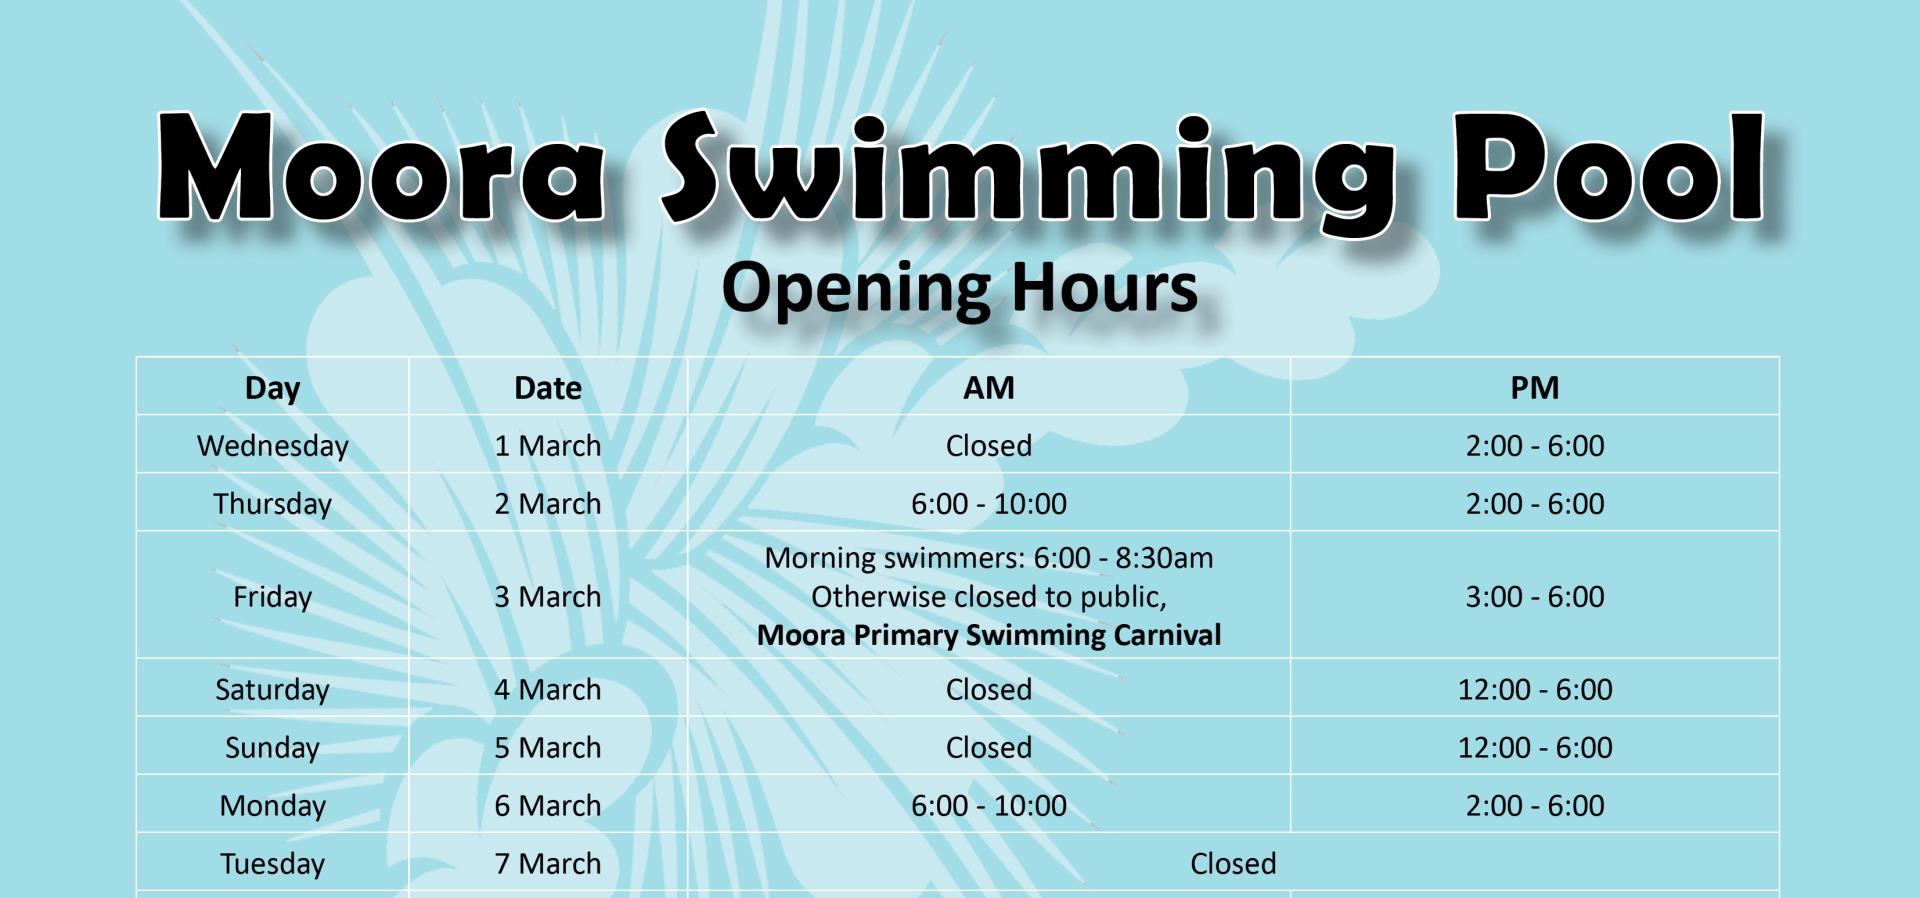 Moora Swimming Pool - Opening Hours